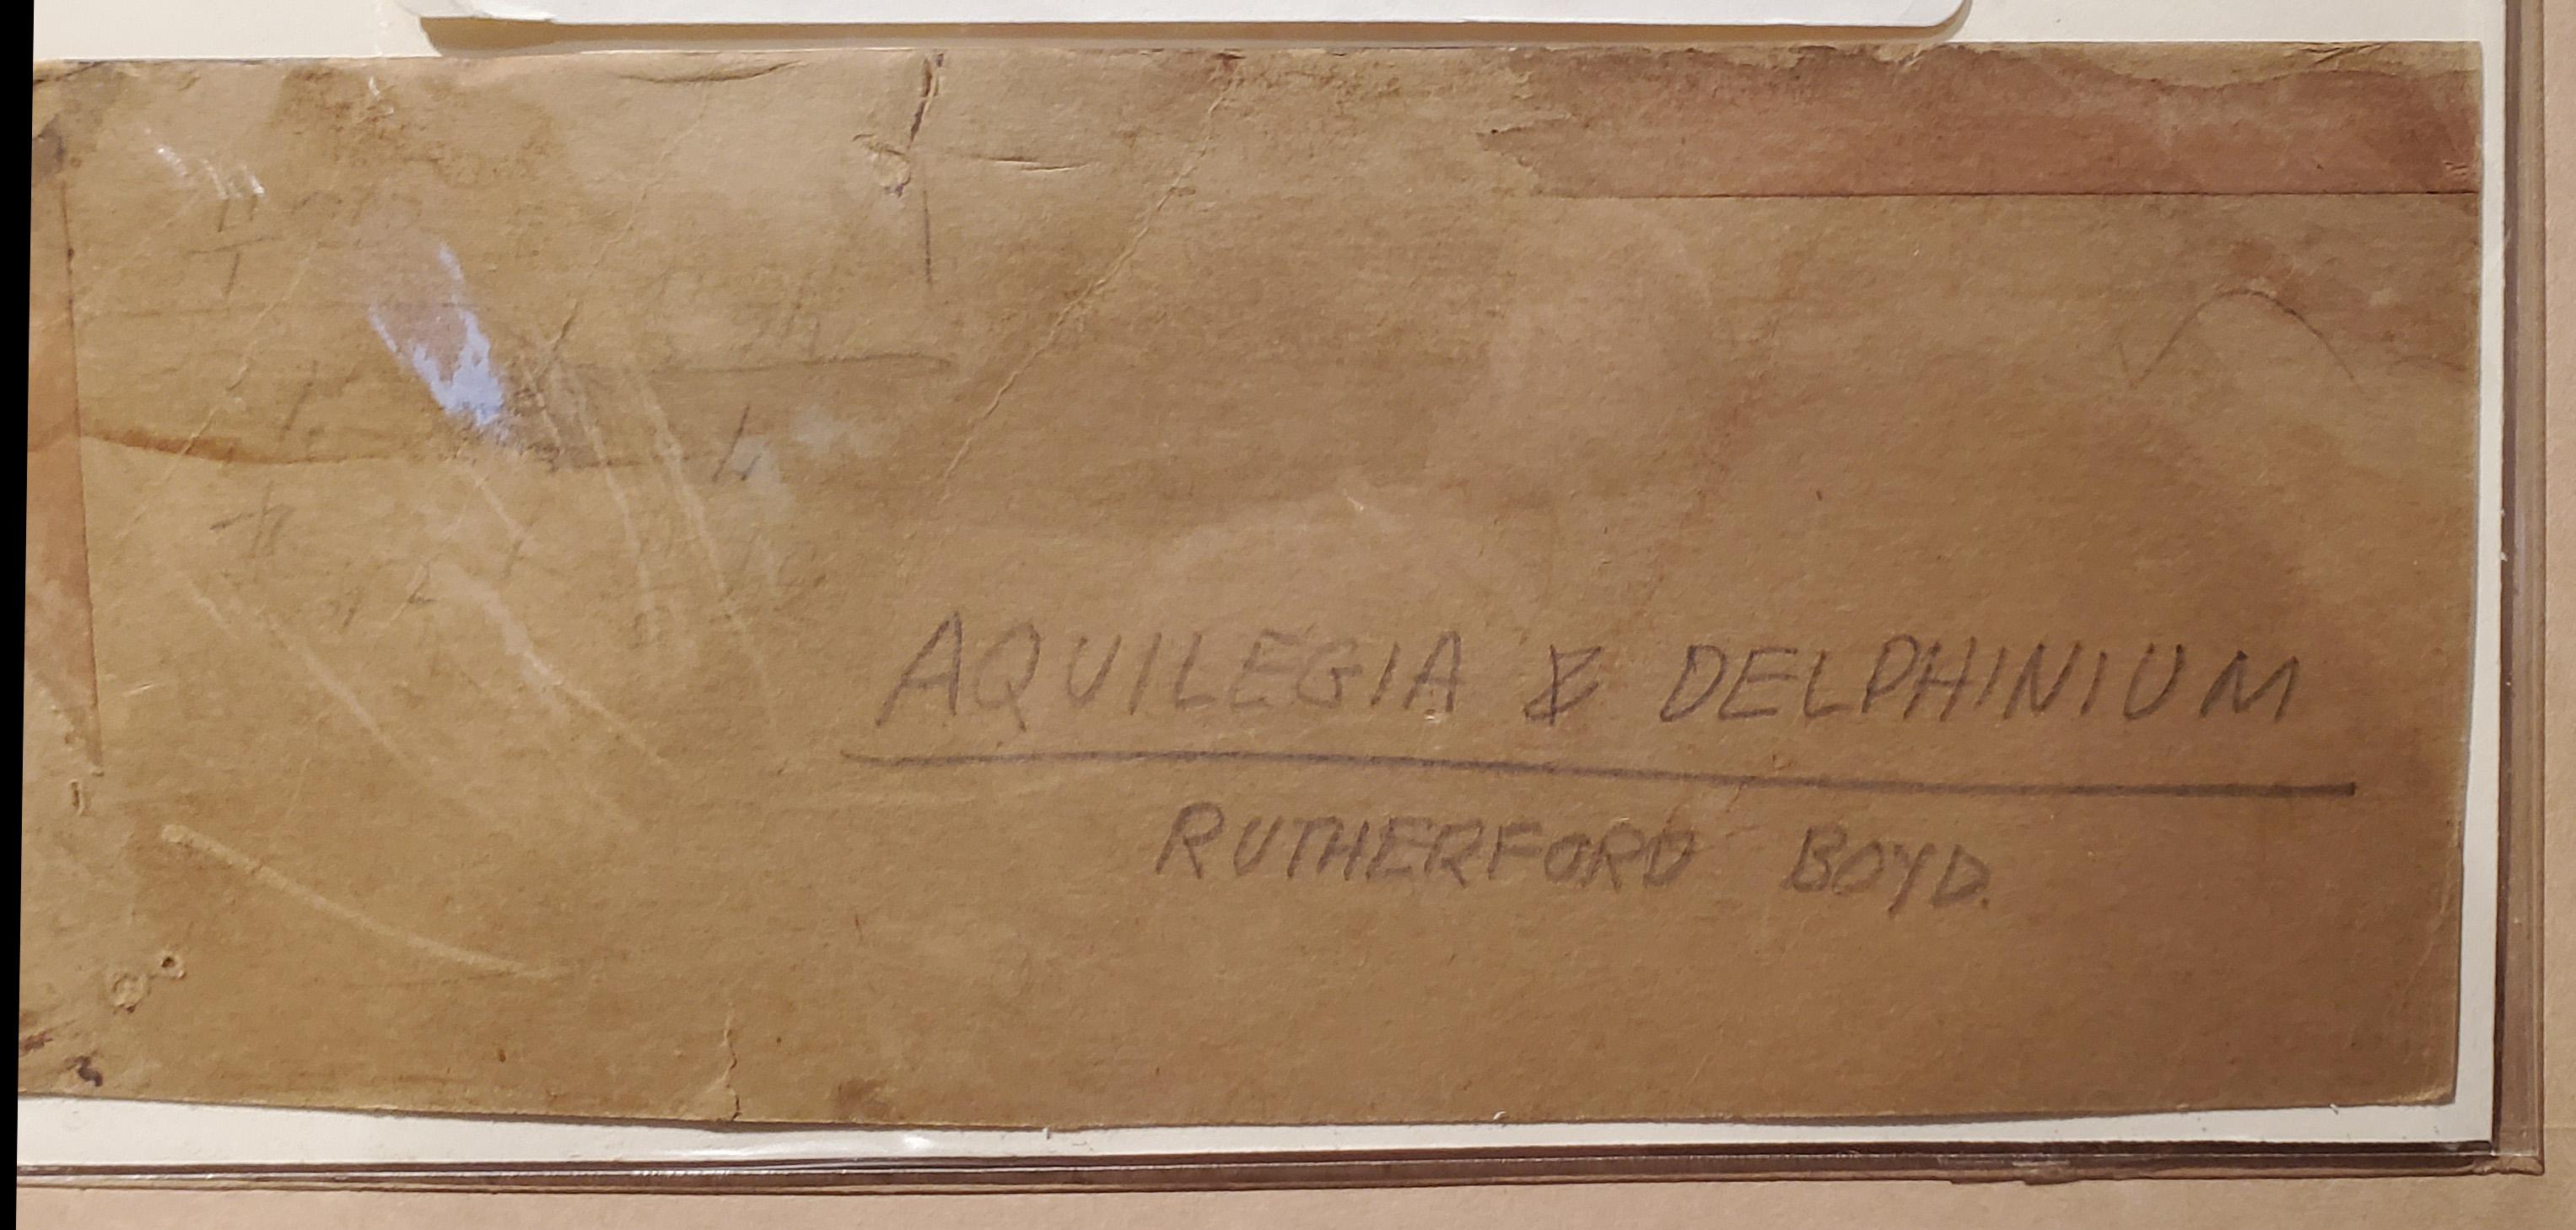 Blumen: Aquilegia und Delphinium – amerikanisches impressionistisches Aquarell auf Papier im Angebot 1